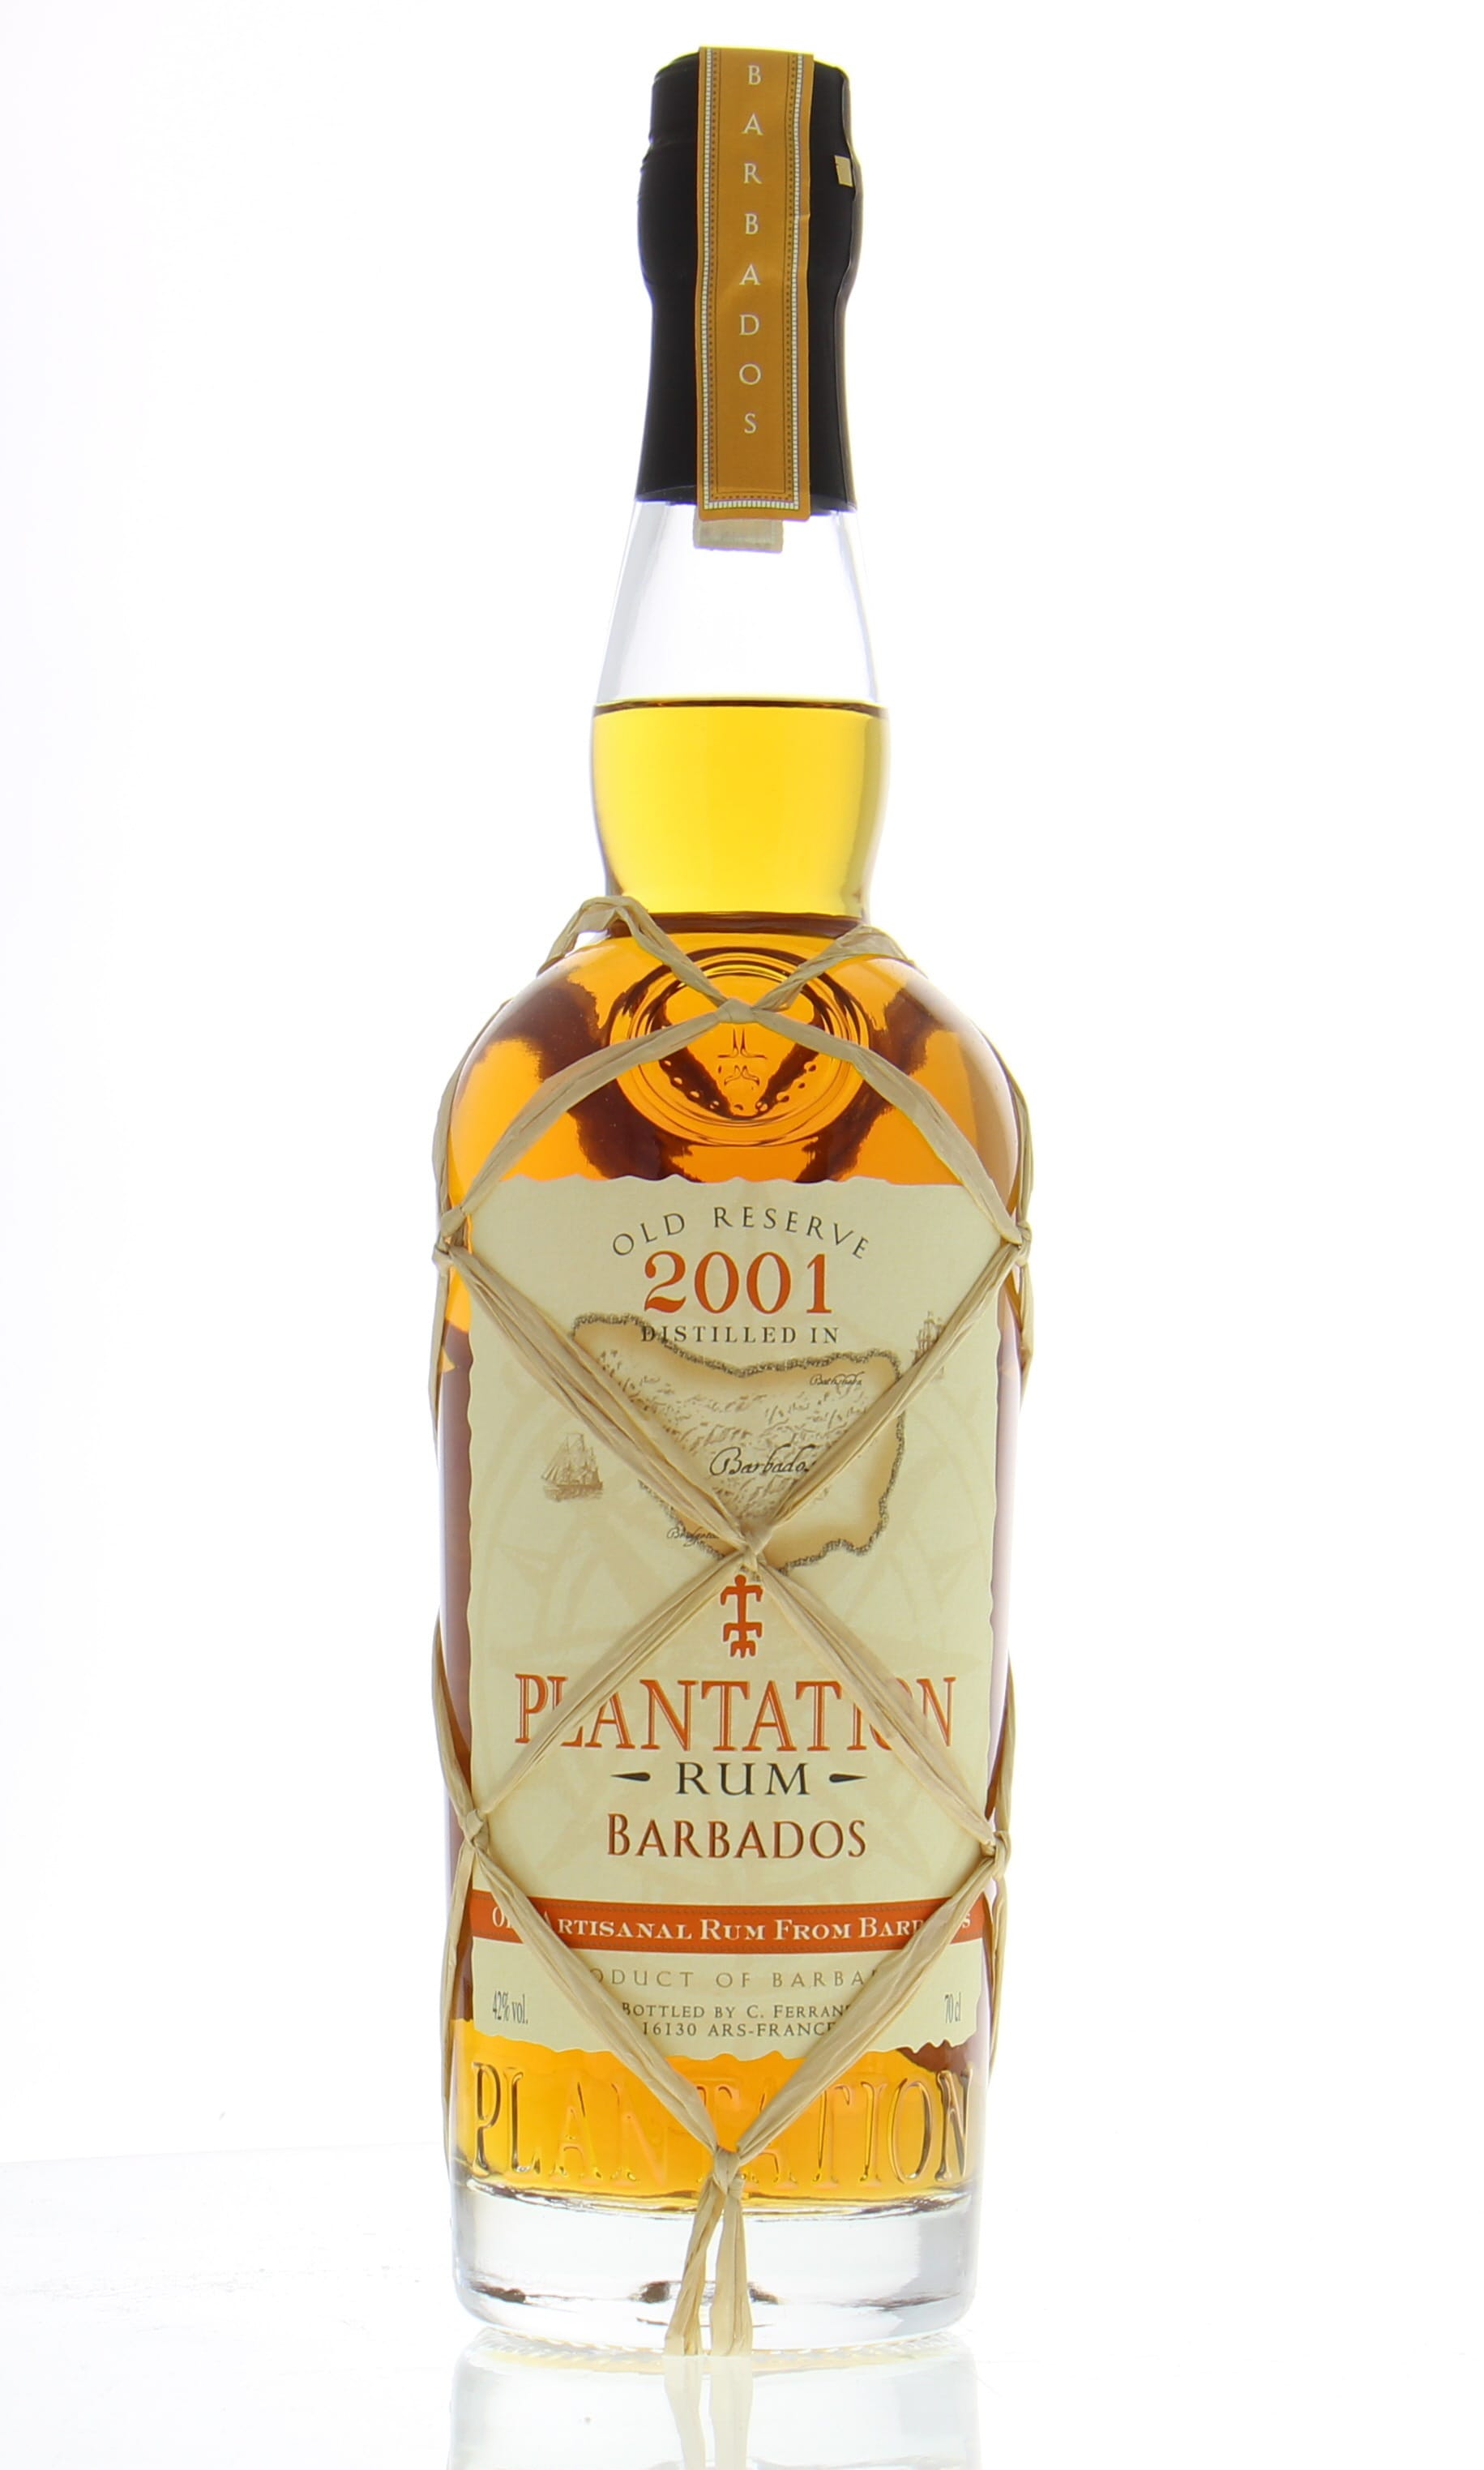 Plantation Rum - Barbados old reserve 2001 42% 2001